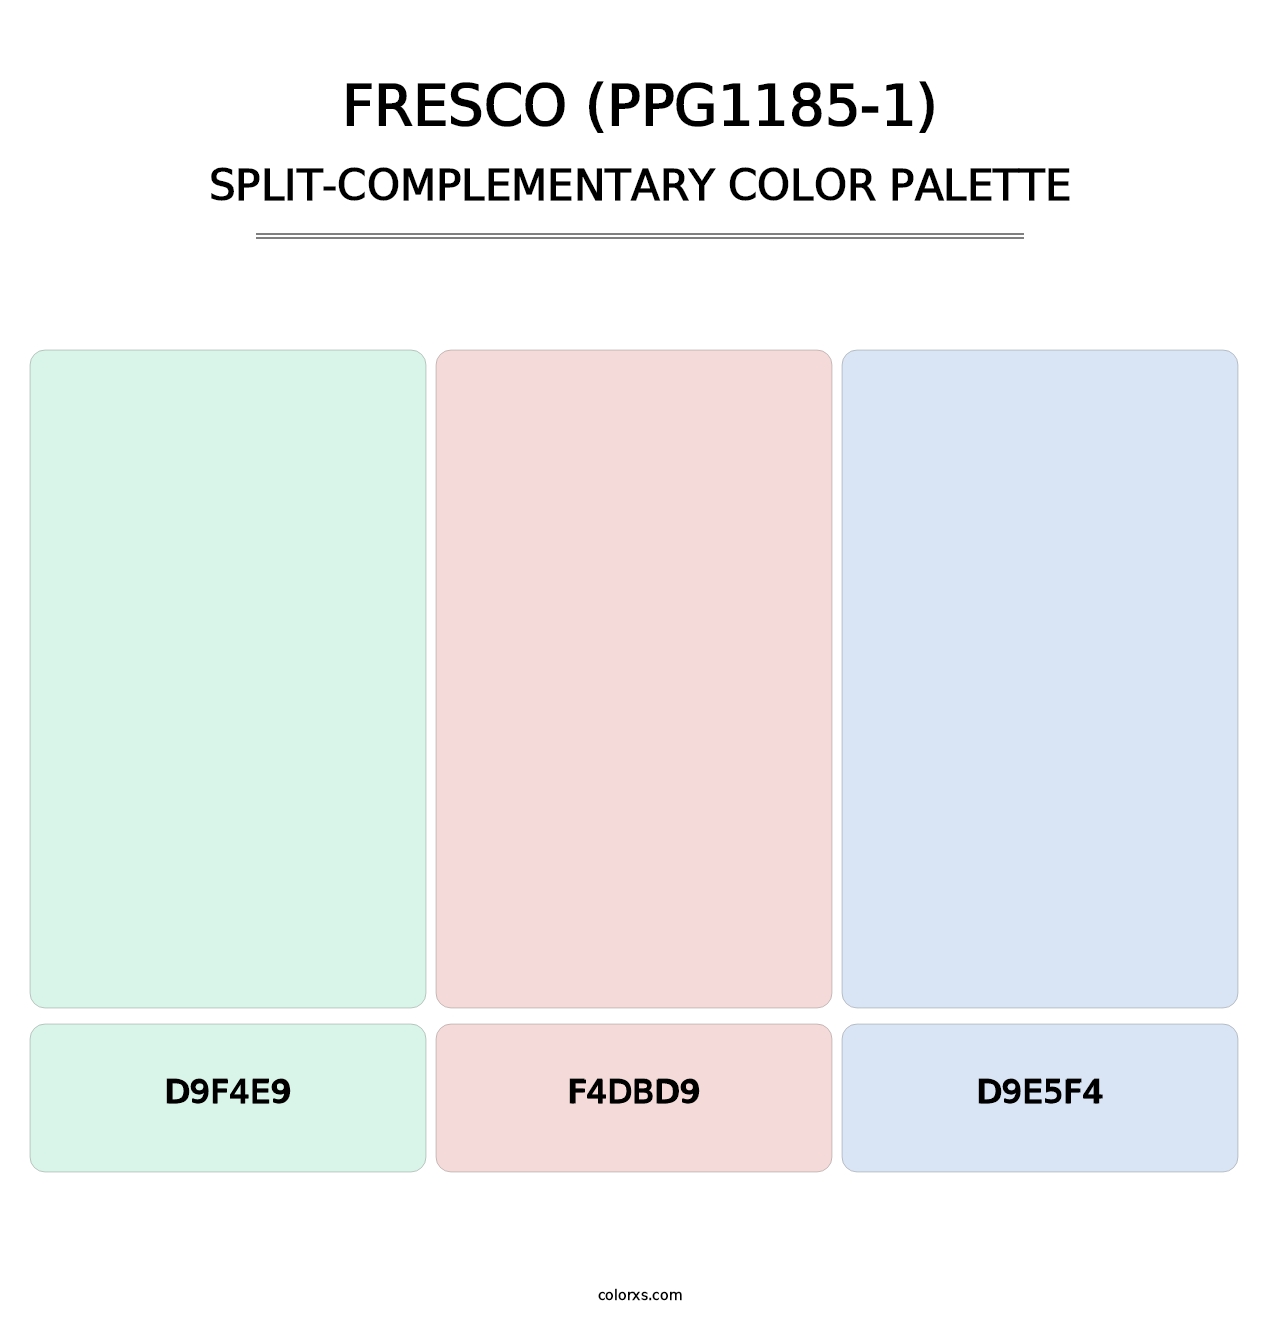 Fresco (PPG1185-1) - Split-Complementary Color Palette